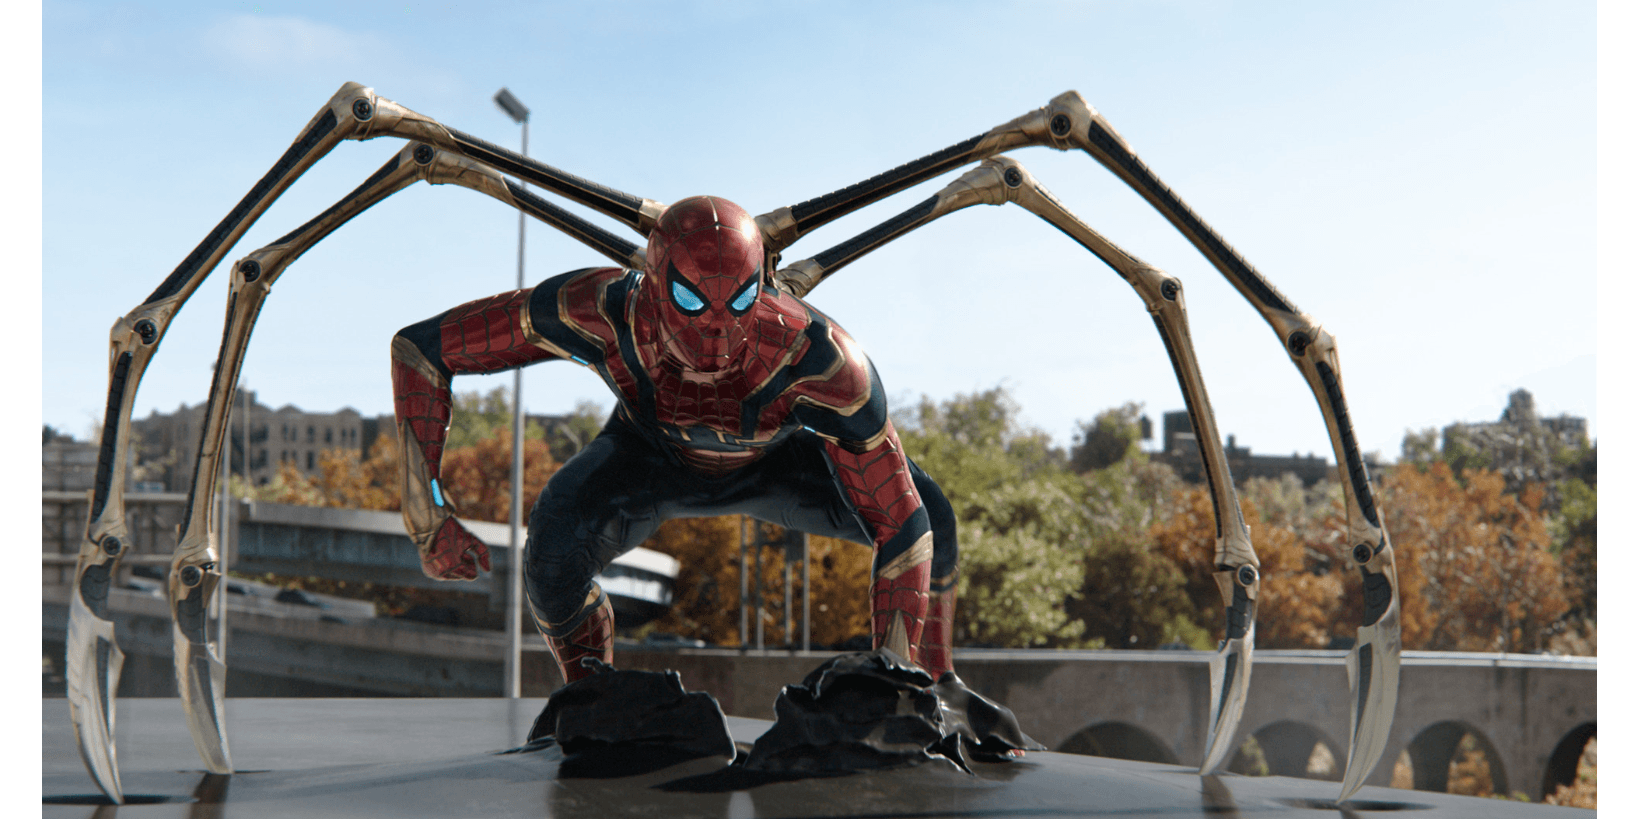 WATCH: ‘Spider-Man: No Way Home’ trailer sees the return of all Spidey-verse villains